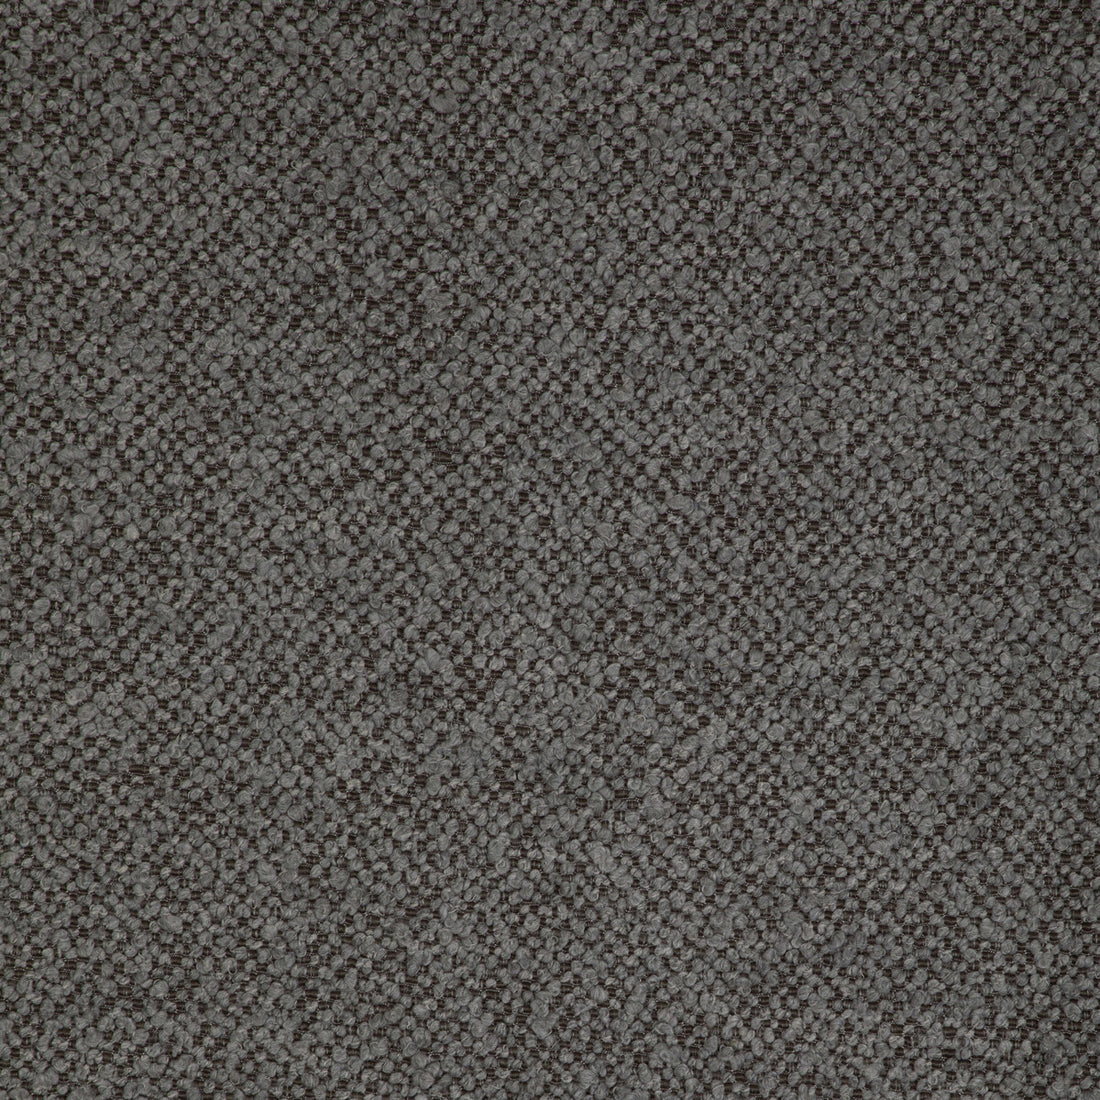 Kravet Smart fabric in 37001-21 color - pattern 37001.21.0 - by Kravet Smart in the Performance Kravetarmor collection